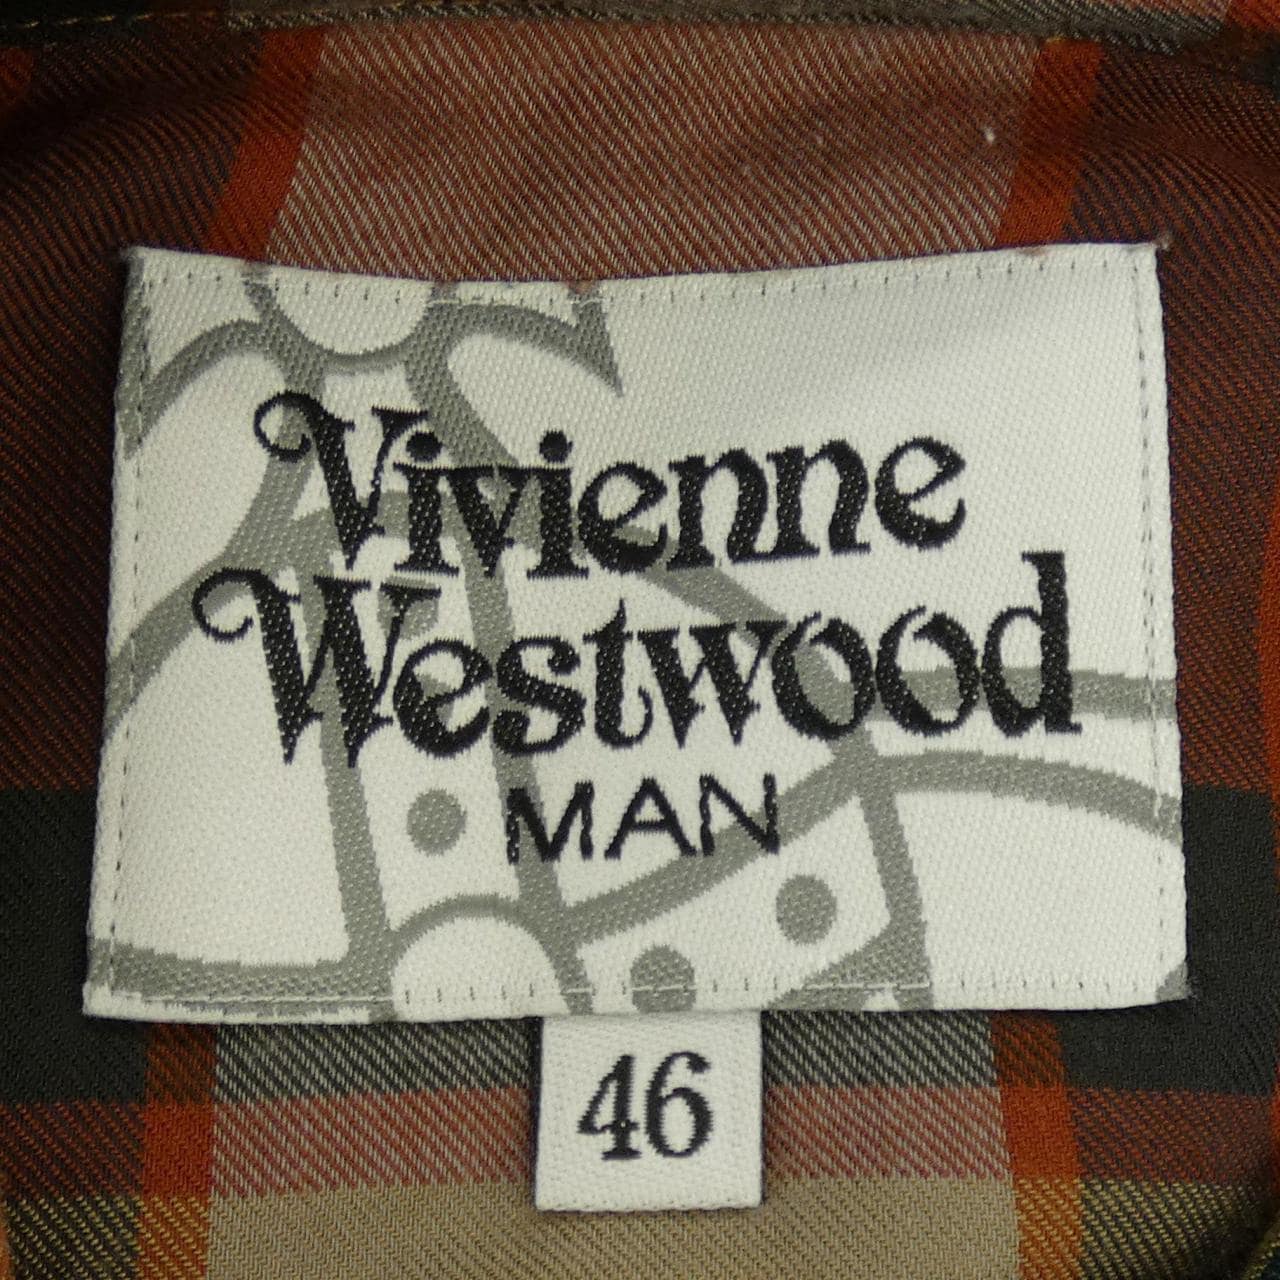 Vivienne Vivienne WestwoodMAN shirt